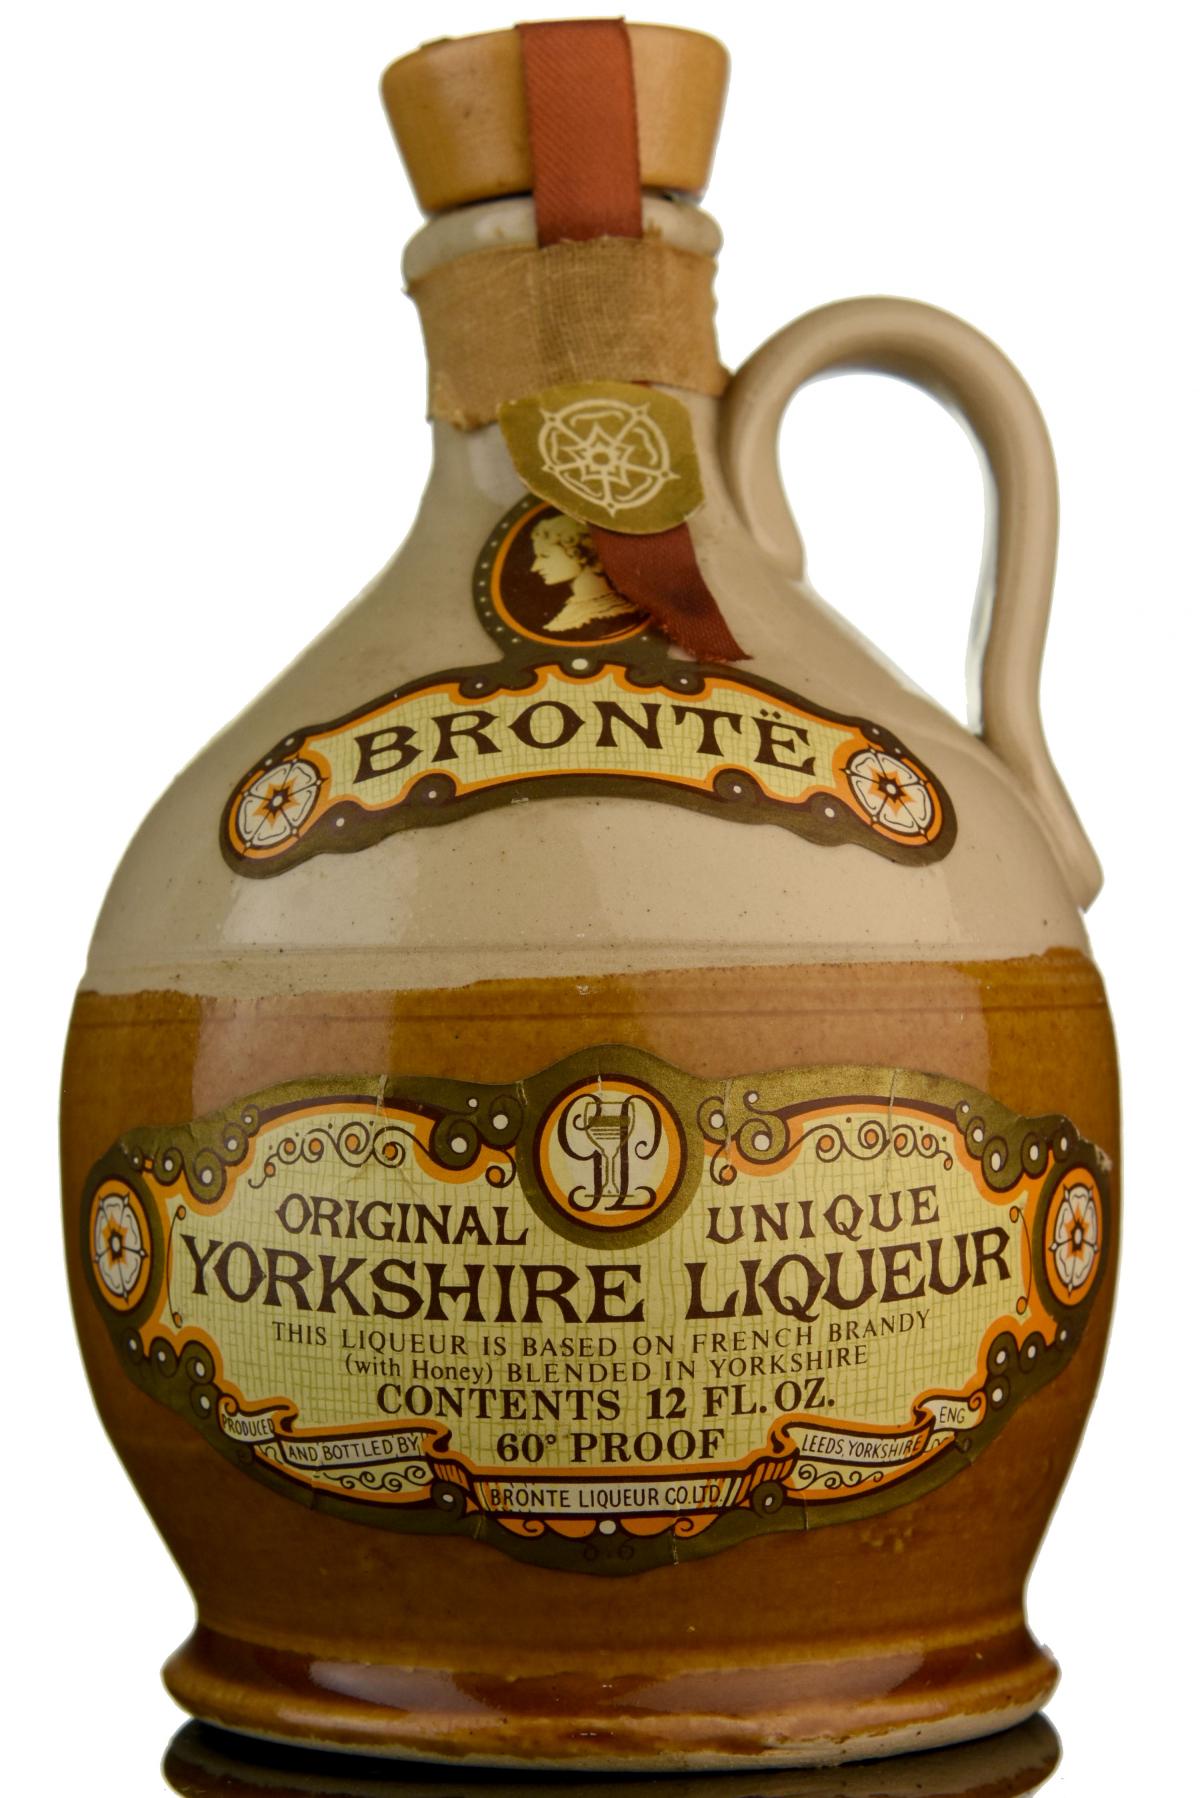 Bronte Yorkshire Liqueur